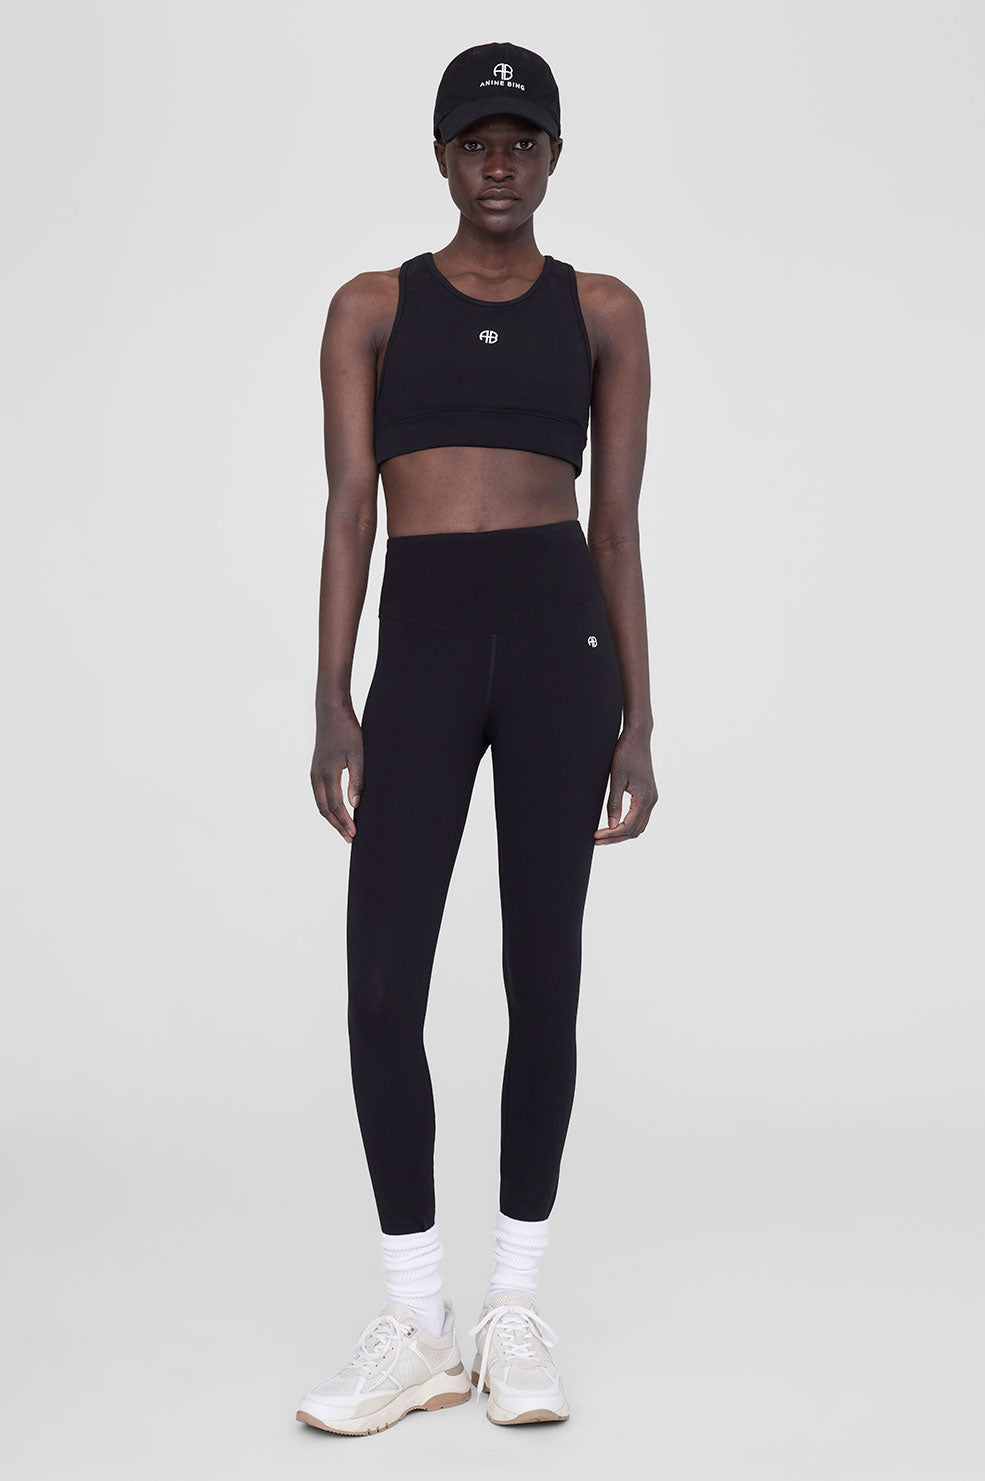 Nike Black Nike Sports Bra, Women's Fashion, Activewear on Carousell